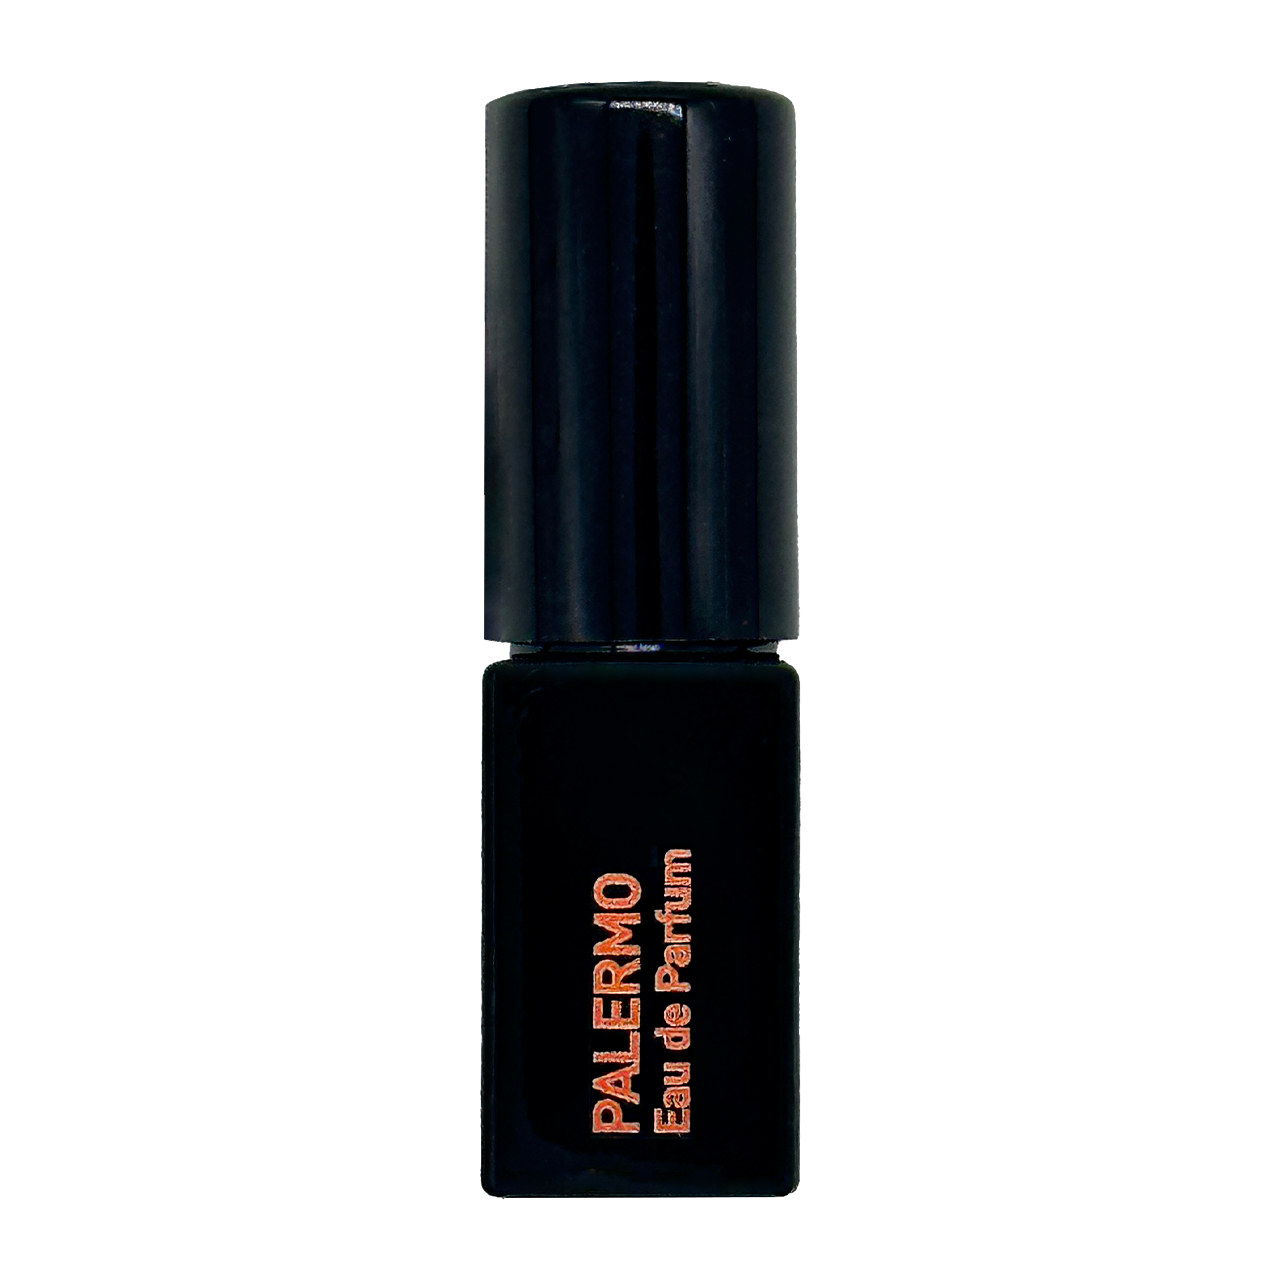 Perfume PALERMO EdP Refill 5ml